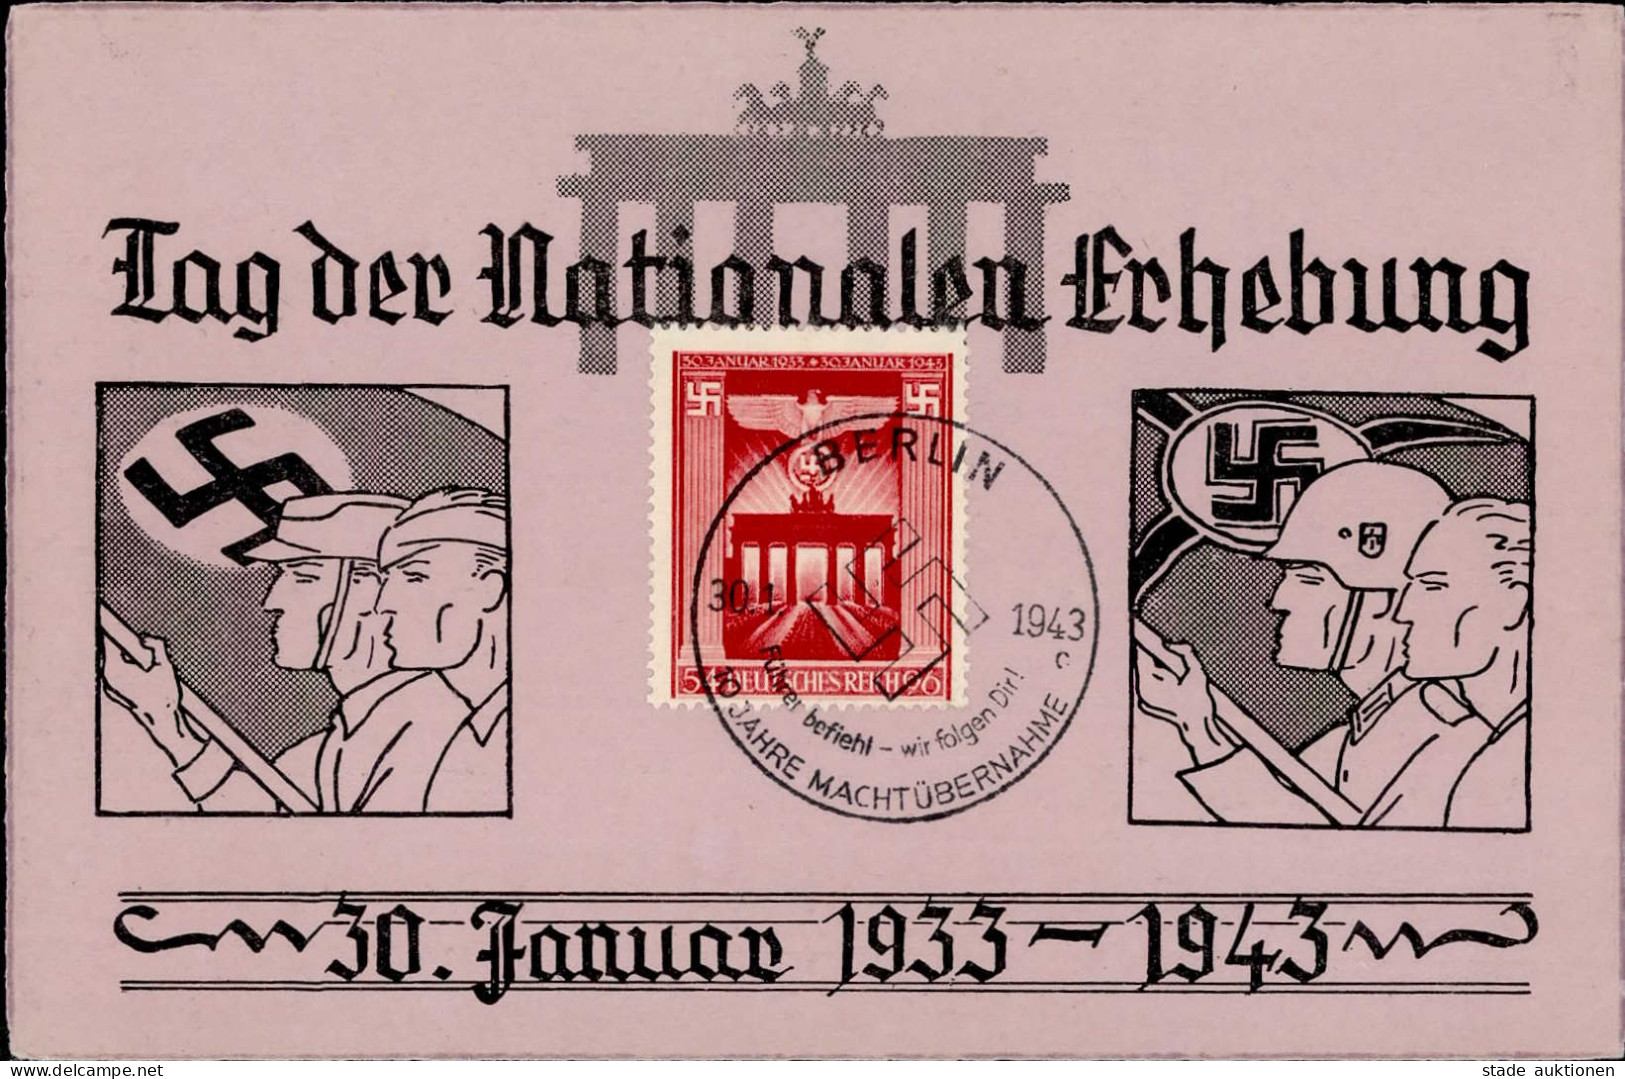 NS-GEDENKKARTE WK II - TAG Der NATIONALEN ERHEBUNG 30. JANUAR 1933-1943 S-o BERLIN I - Weltkrieg 1939-45